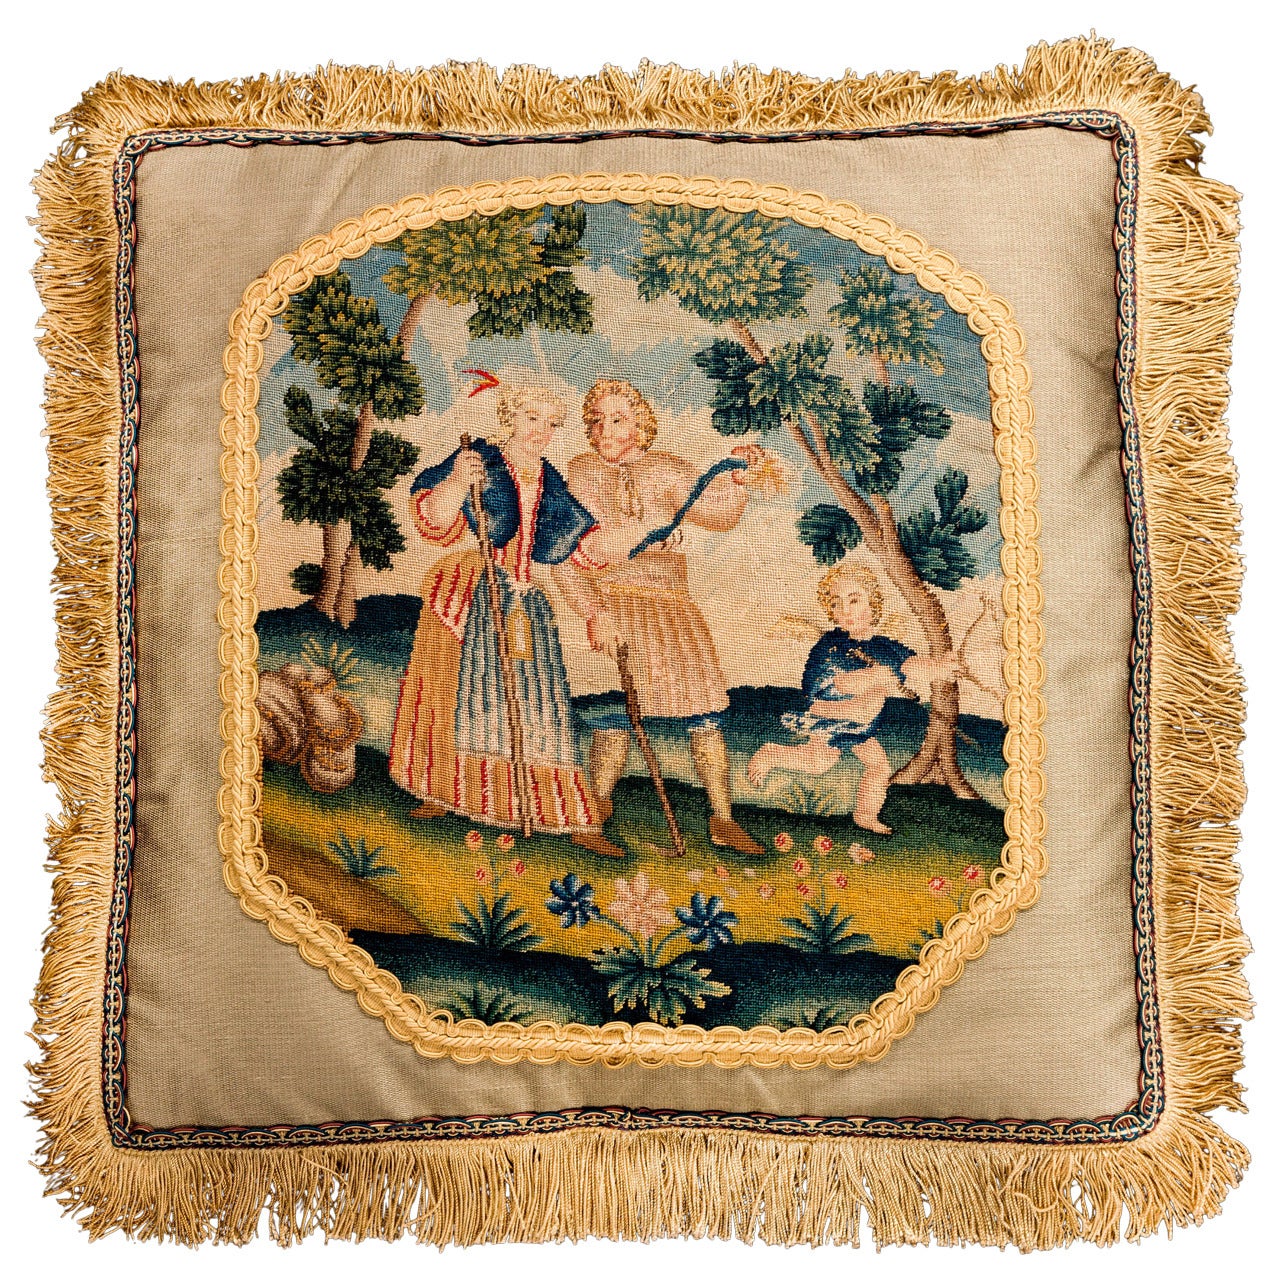 Cushion: 18th Century, Wool. Three Figures in a Garden Setting